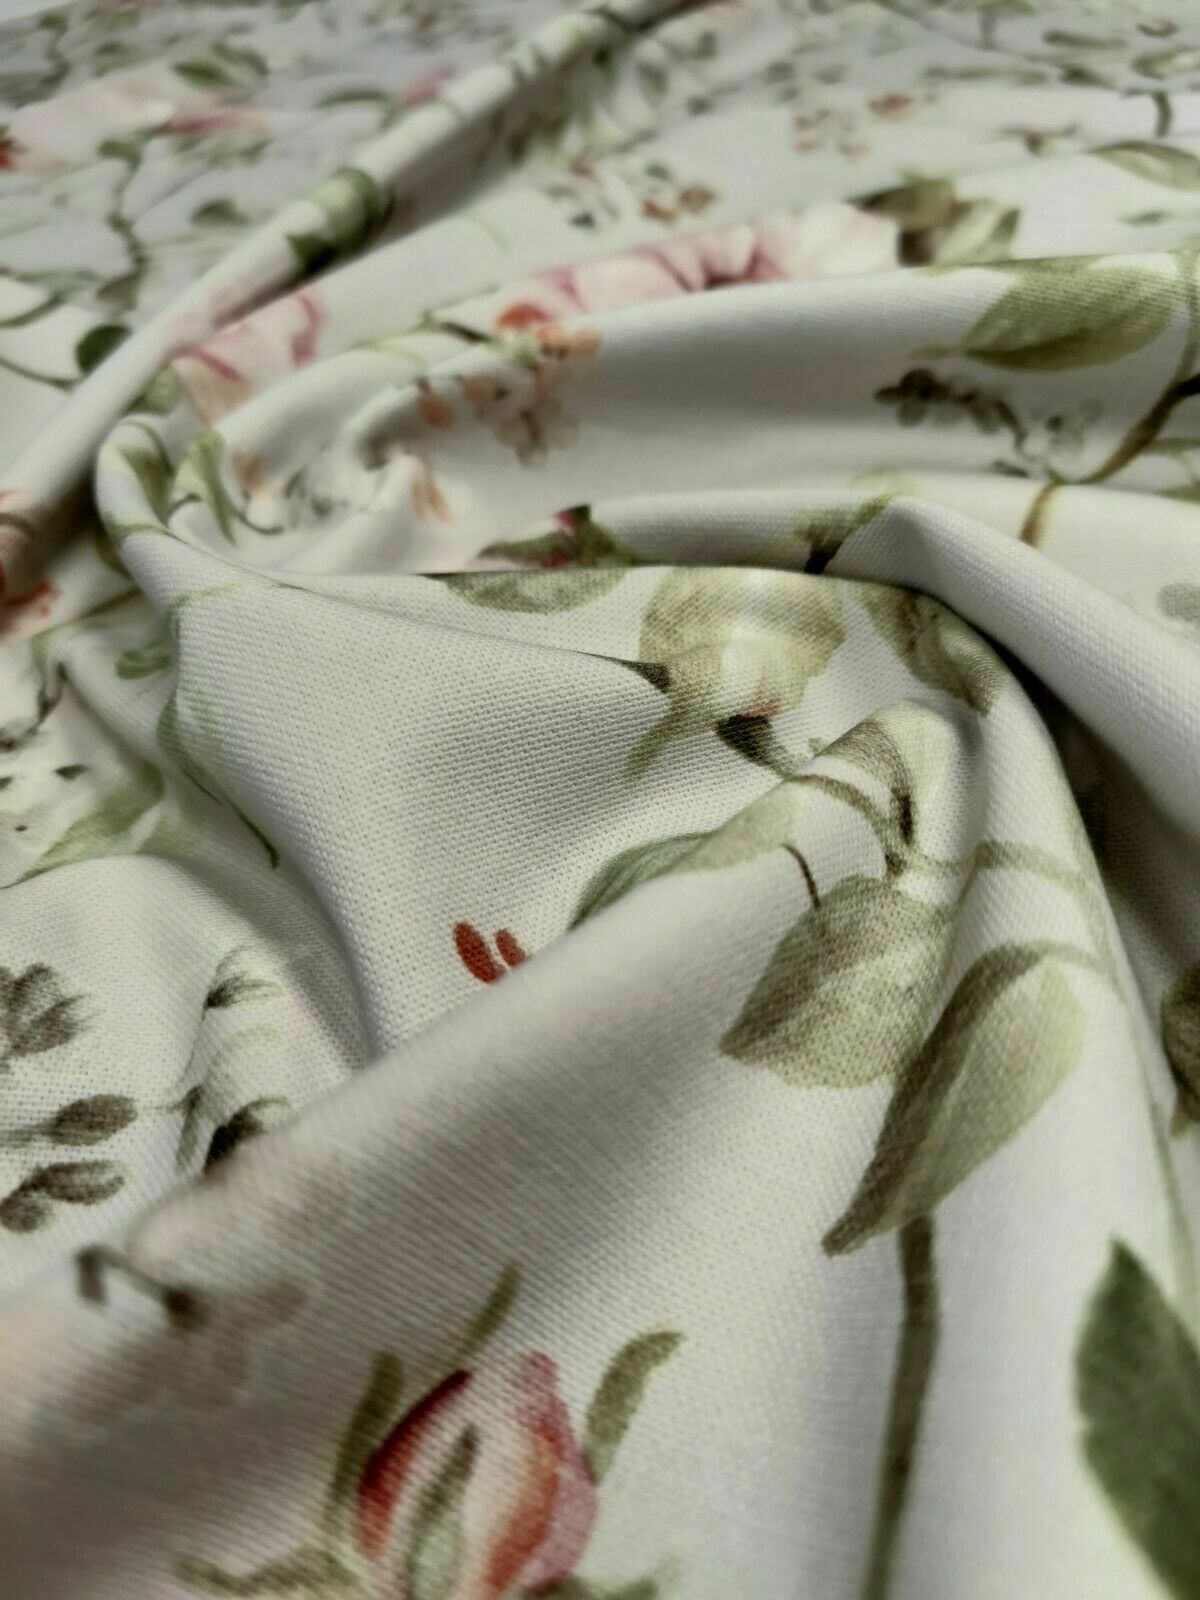 Prestigious Textiles Fragrant Blossom Curtain Upholstery Fabric 3.8 Metres